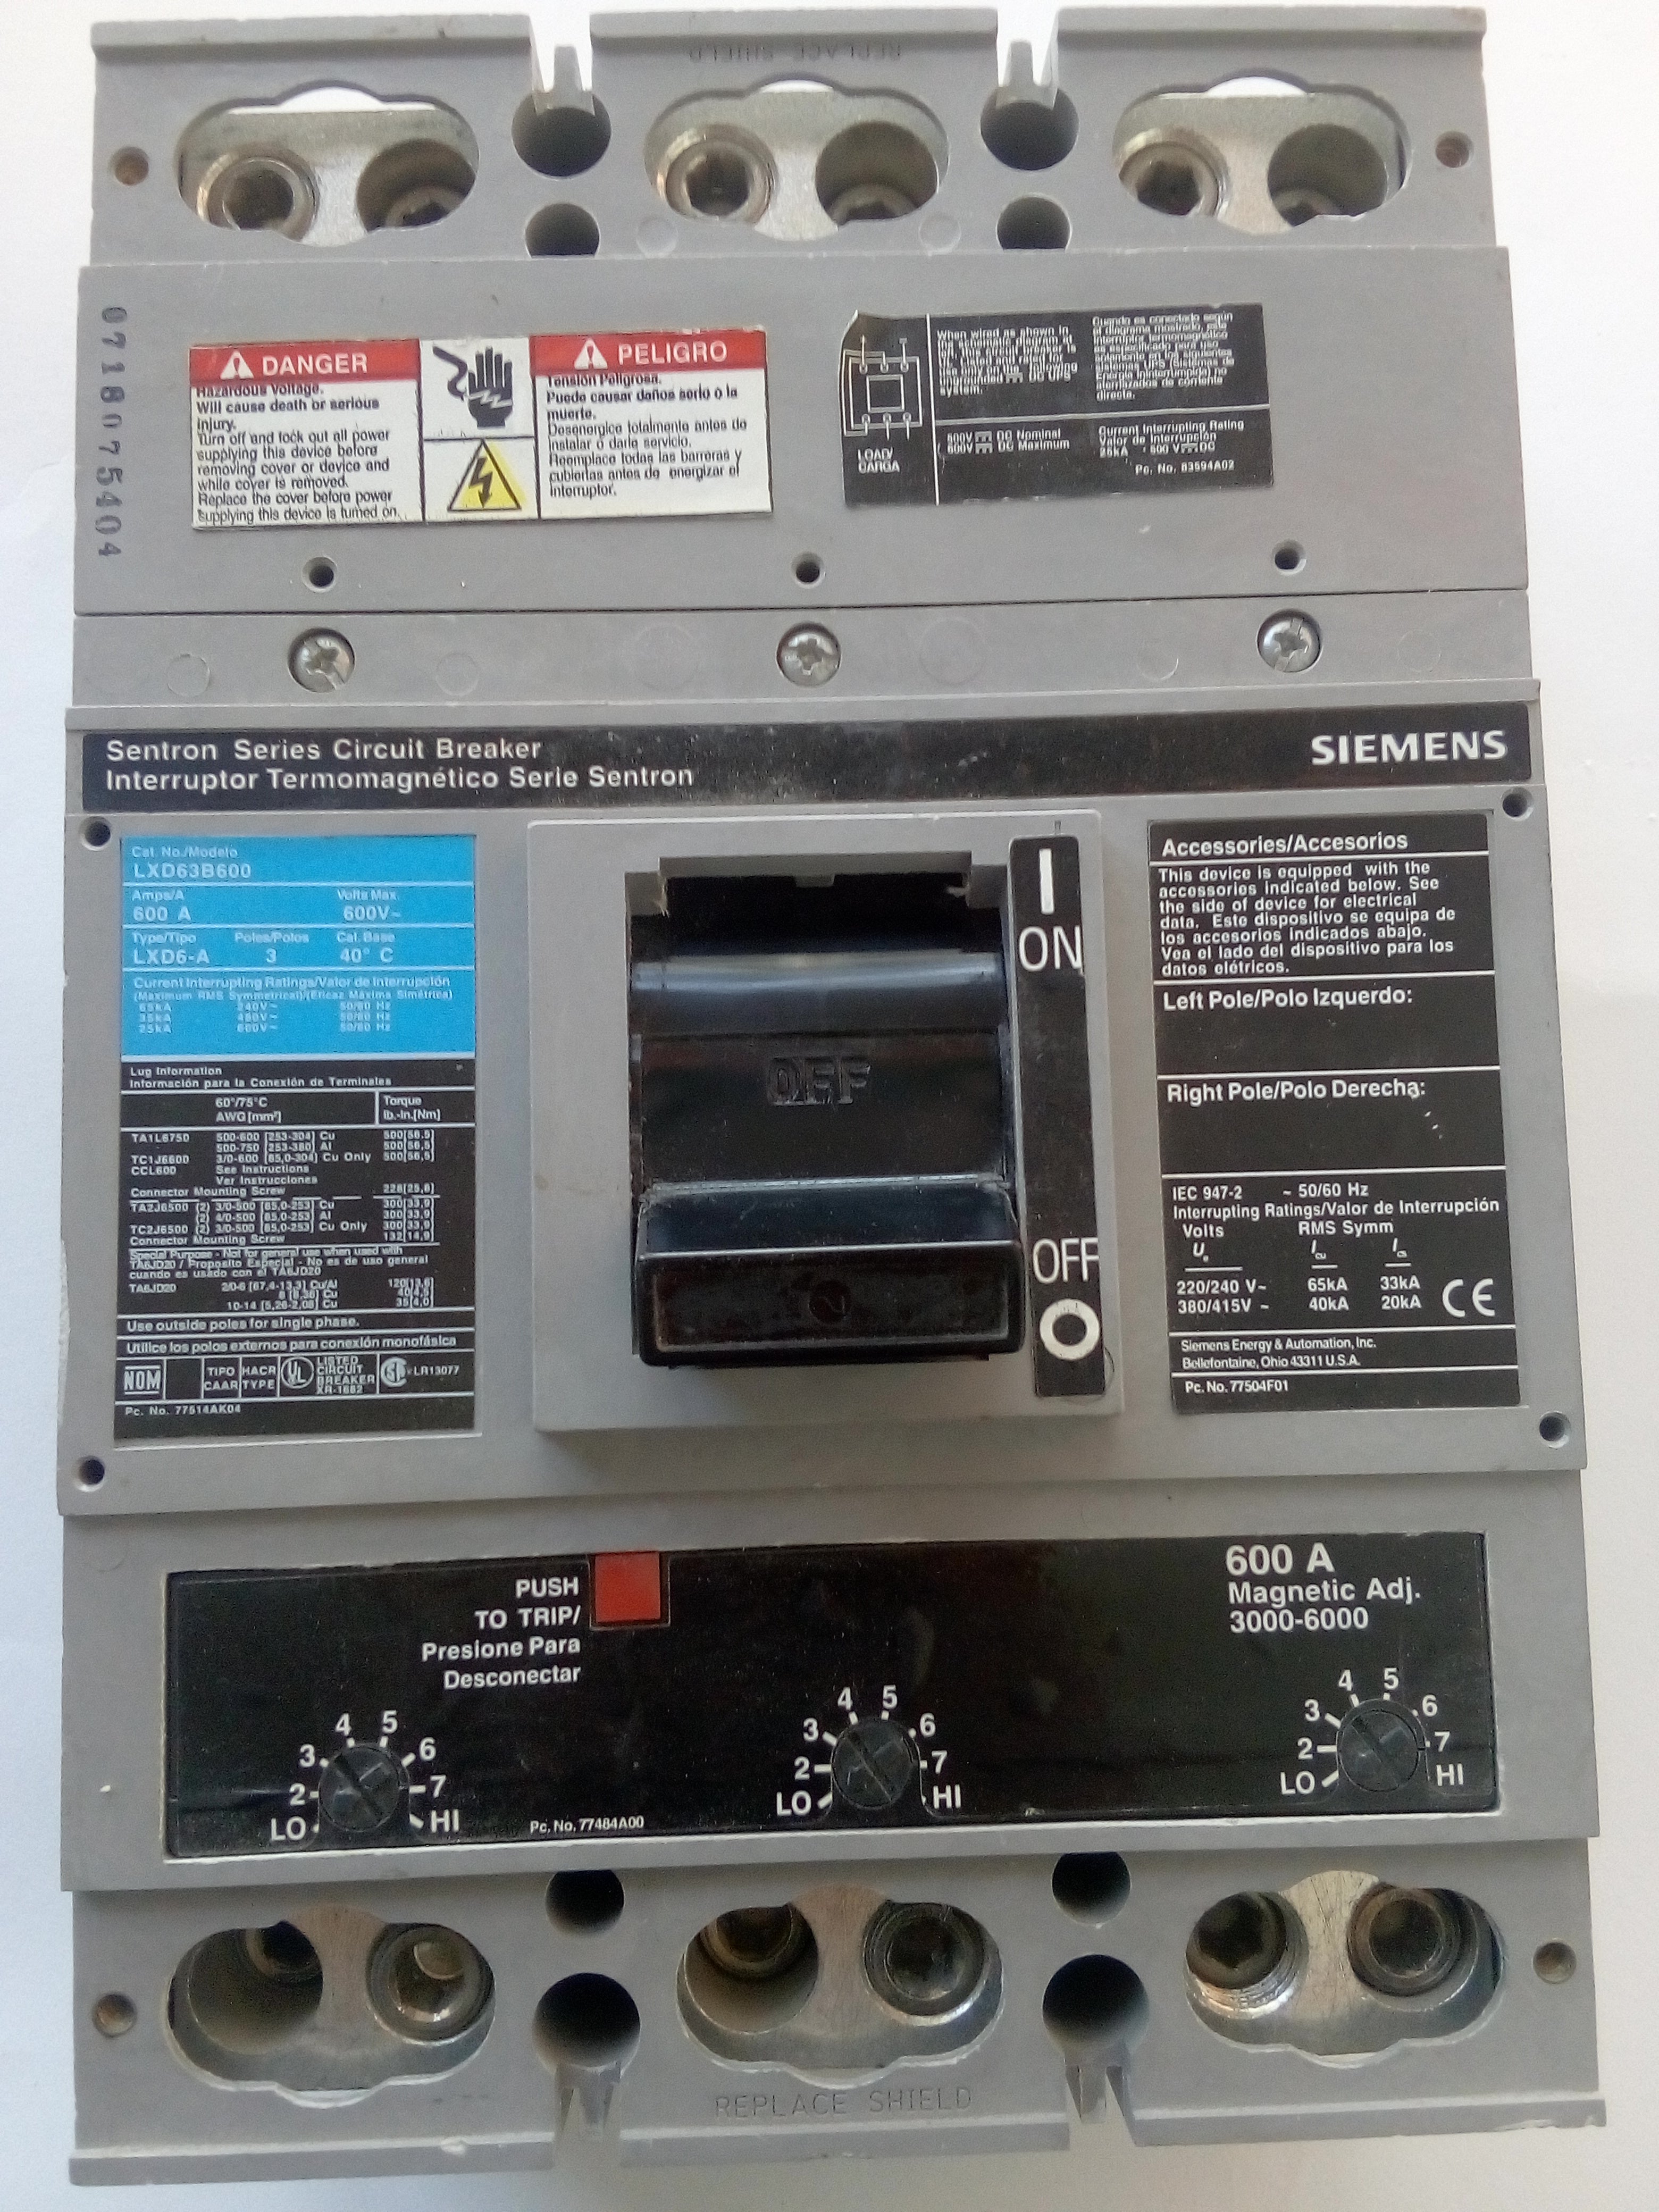 Interruptor Siemens LXD63B600